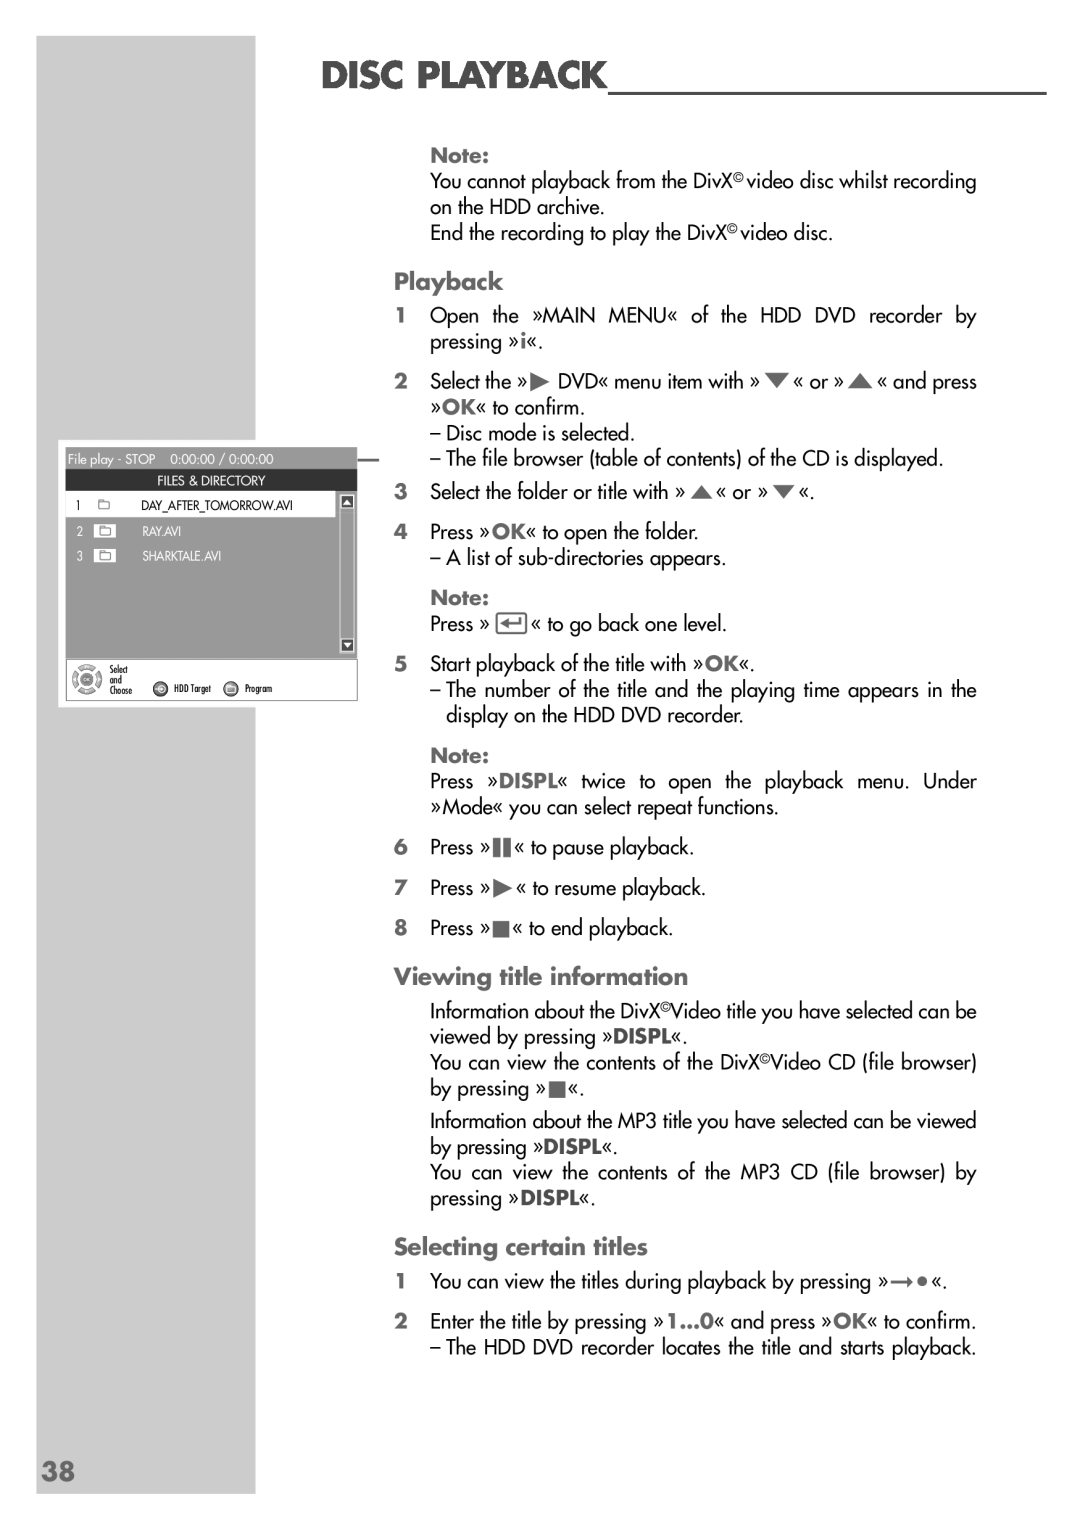 Grundig 5550 HDD manual Viewing title information, Selecting certain titles, Disc Playback, Dayaftertomorrow.Avi 